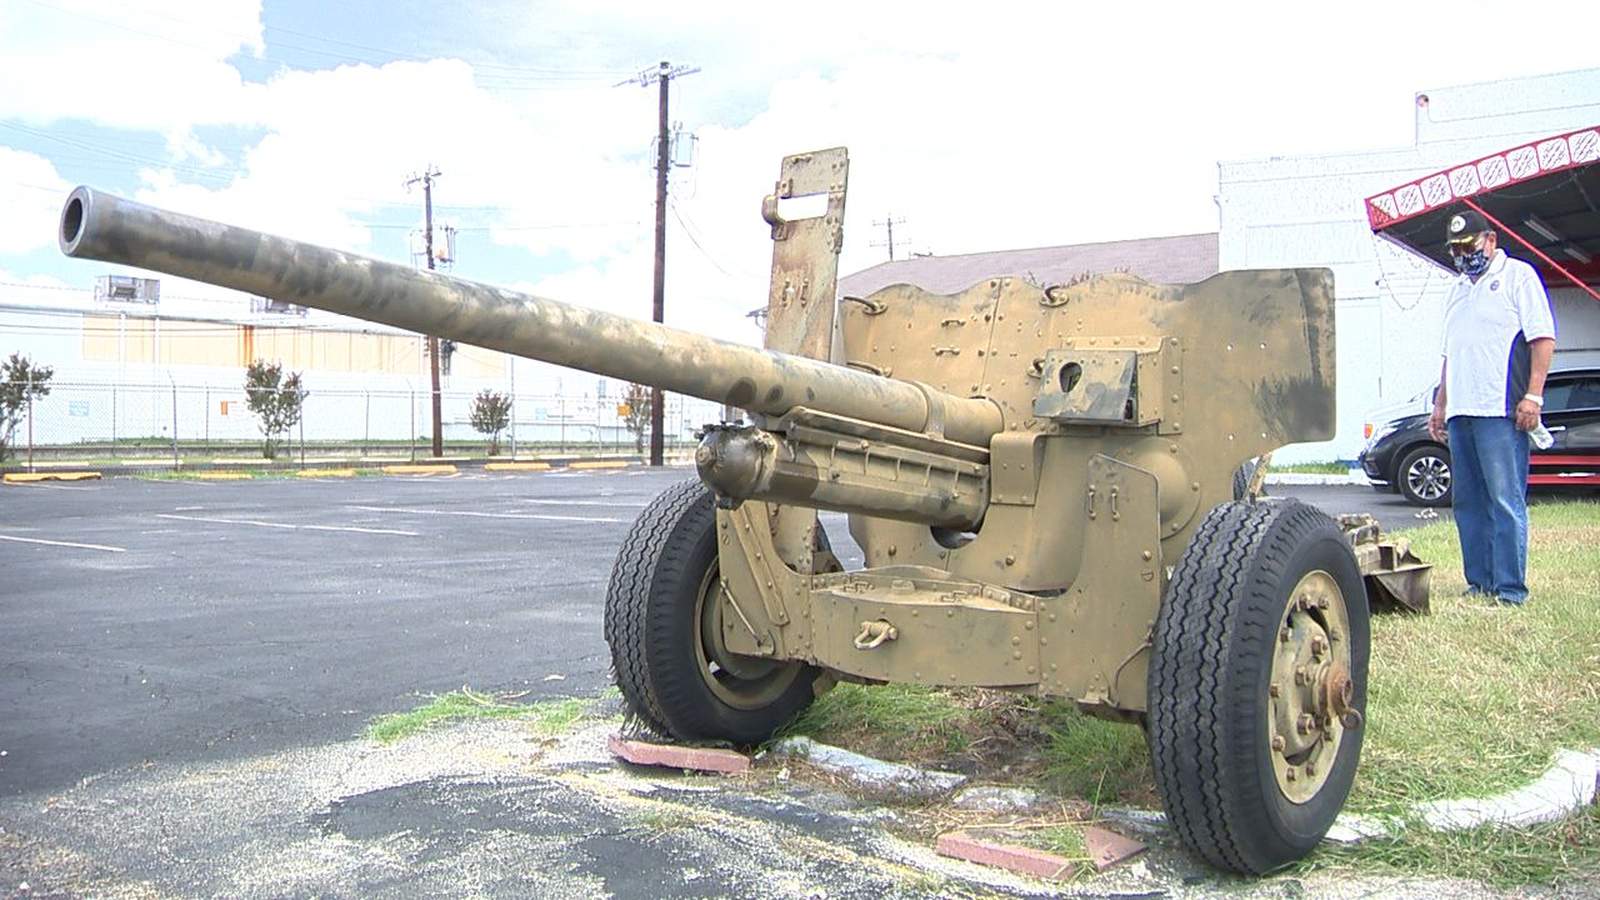 Stolen World War II-era cannon recovered in storage unit miles away in northeast San Antonio